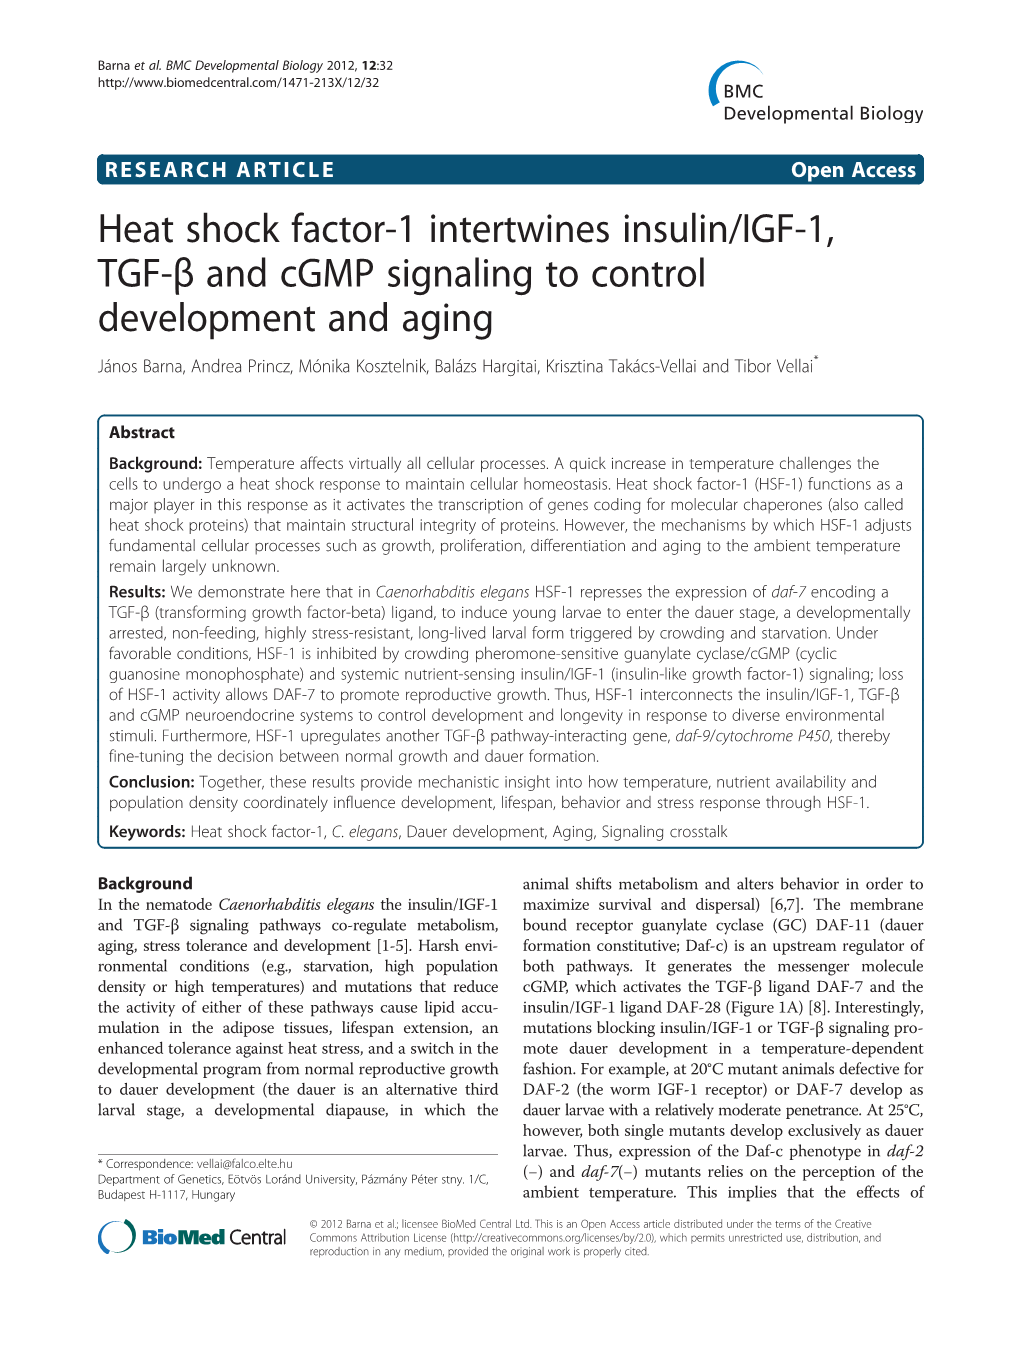 Heat Shock Factor-1 Intertwines Insulin/IGF-1, TGF- and Cgmp